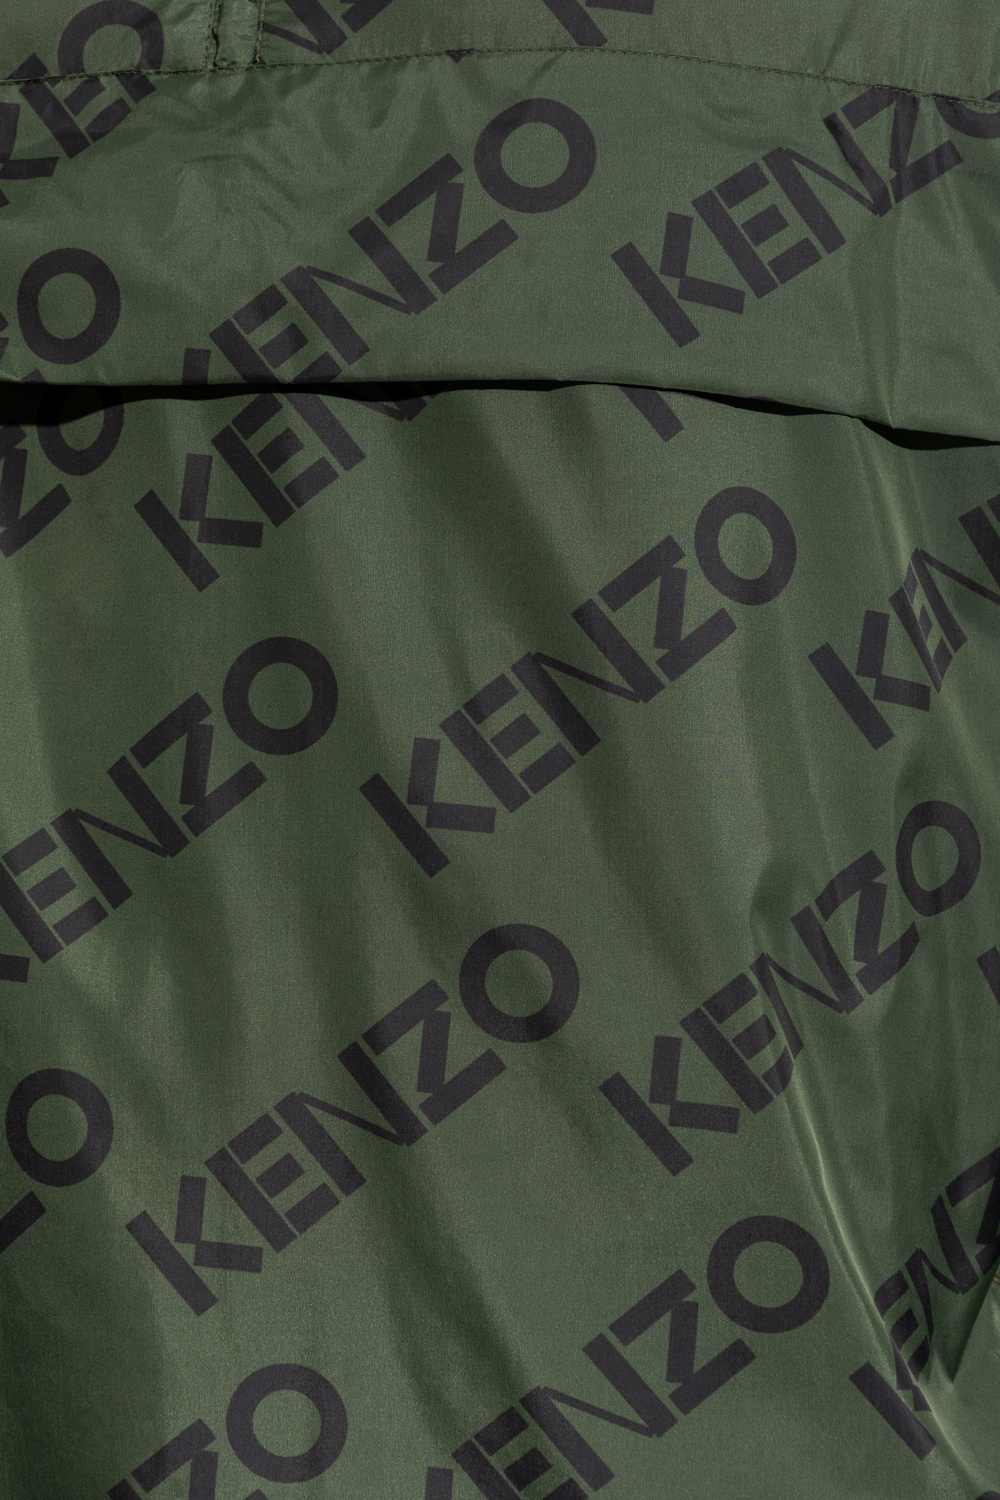 Kenzo floaty jacket with logo